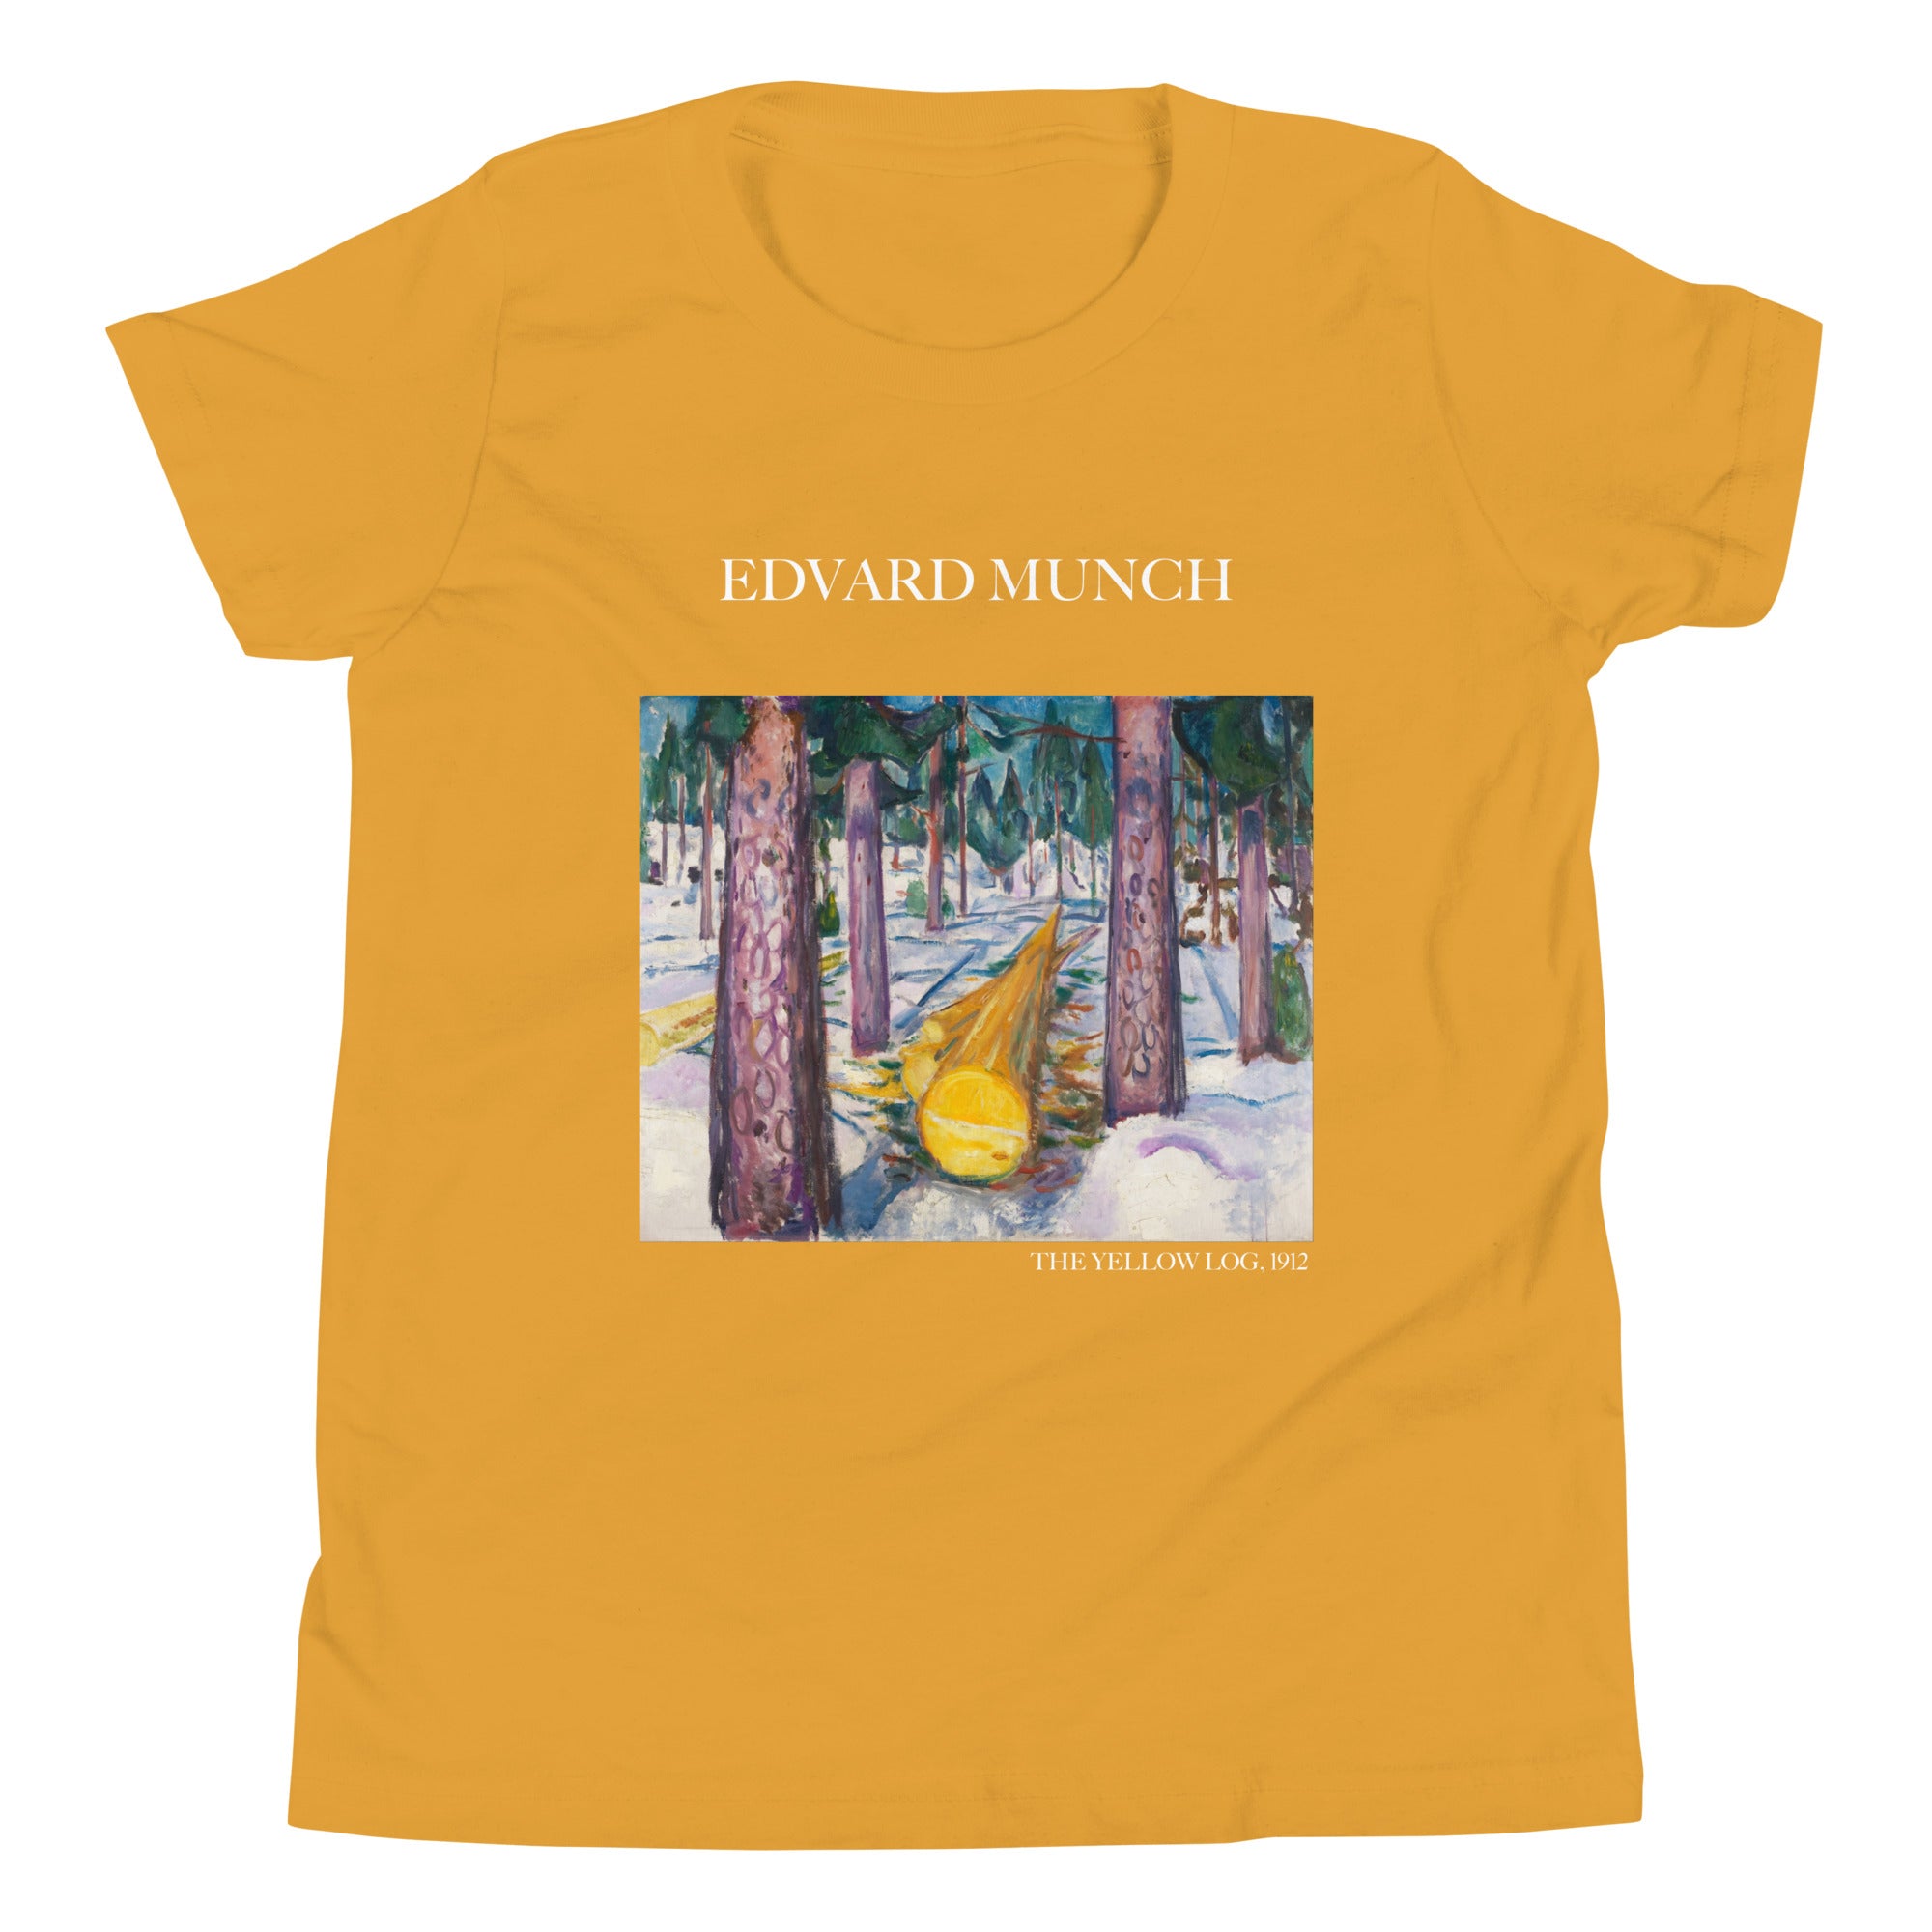 Edvard Munch 'The Yellow Log' Famous Painting Short Sleeve T-Shirt | Premium Youth Art Tee